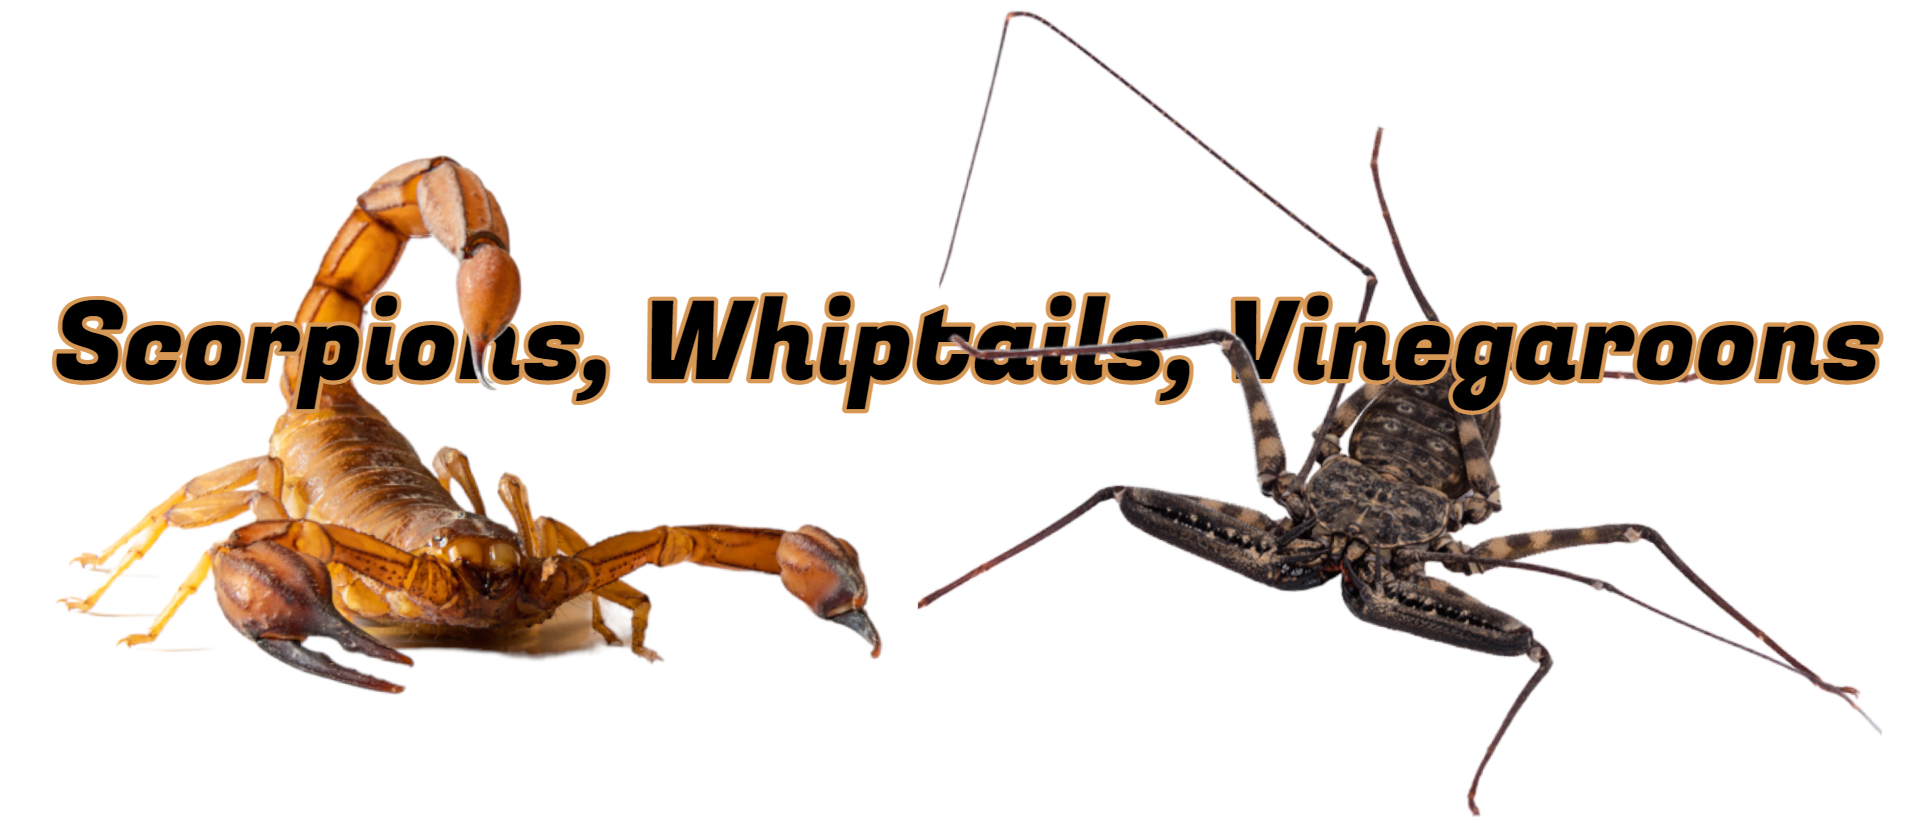 Vinegaroons, Whiptails, & Scorpions For Sale